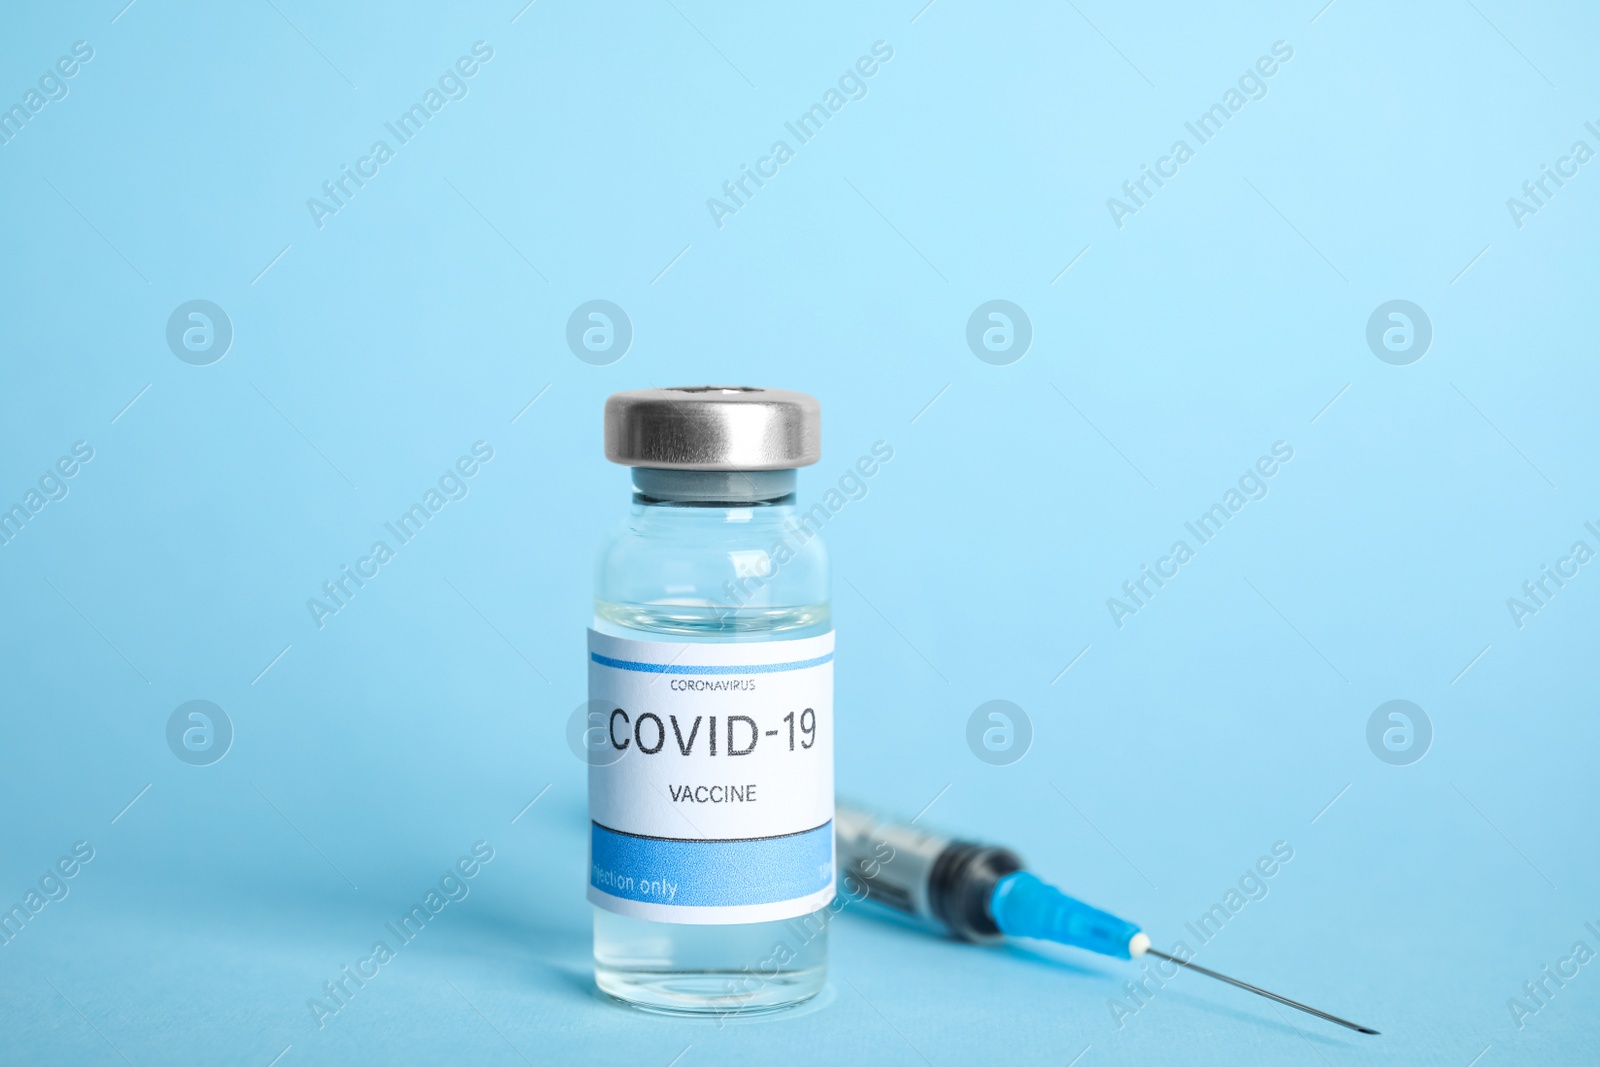 Photo of Vial with coronavirus vaccine and syringe on light blue background